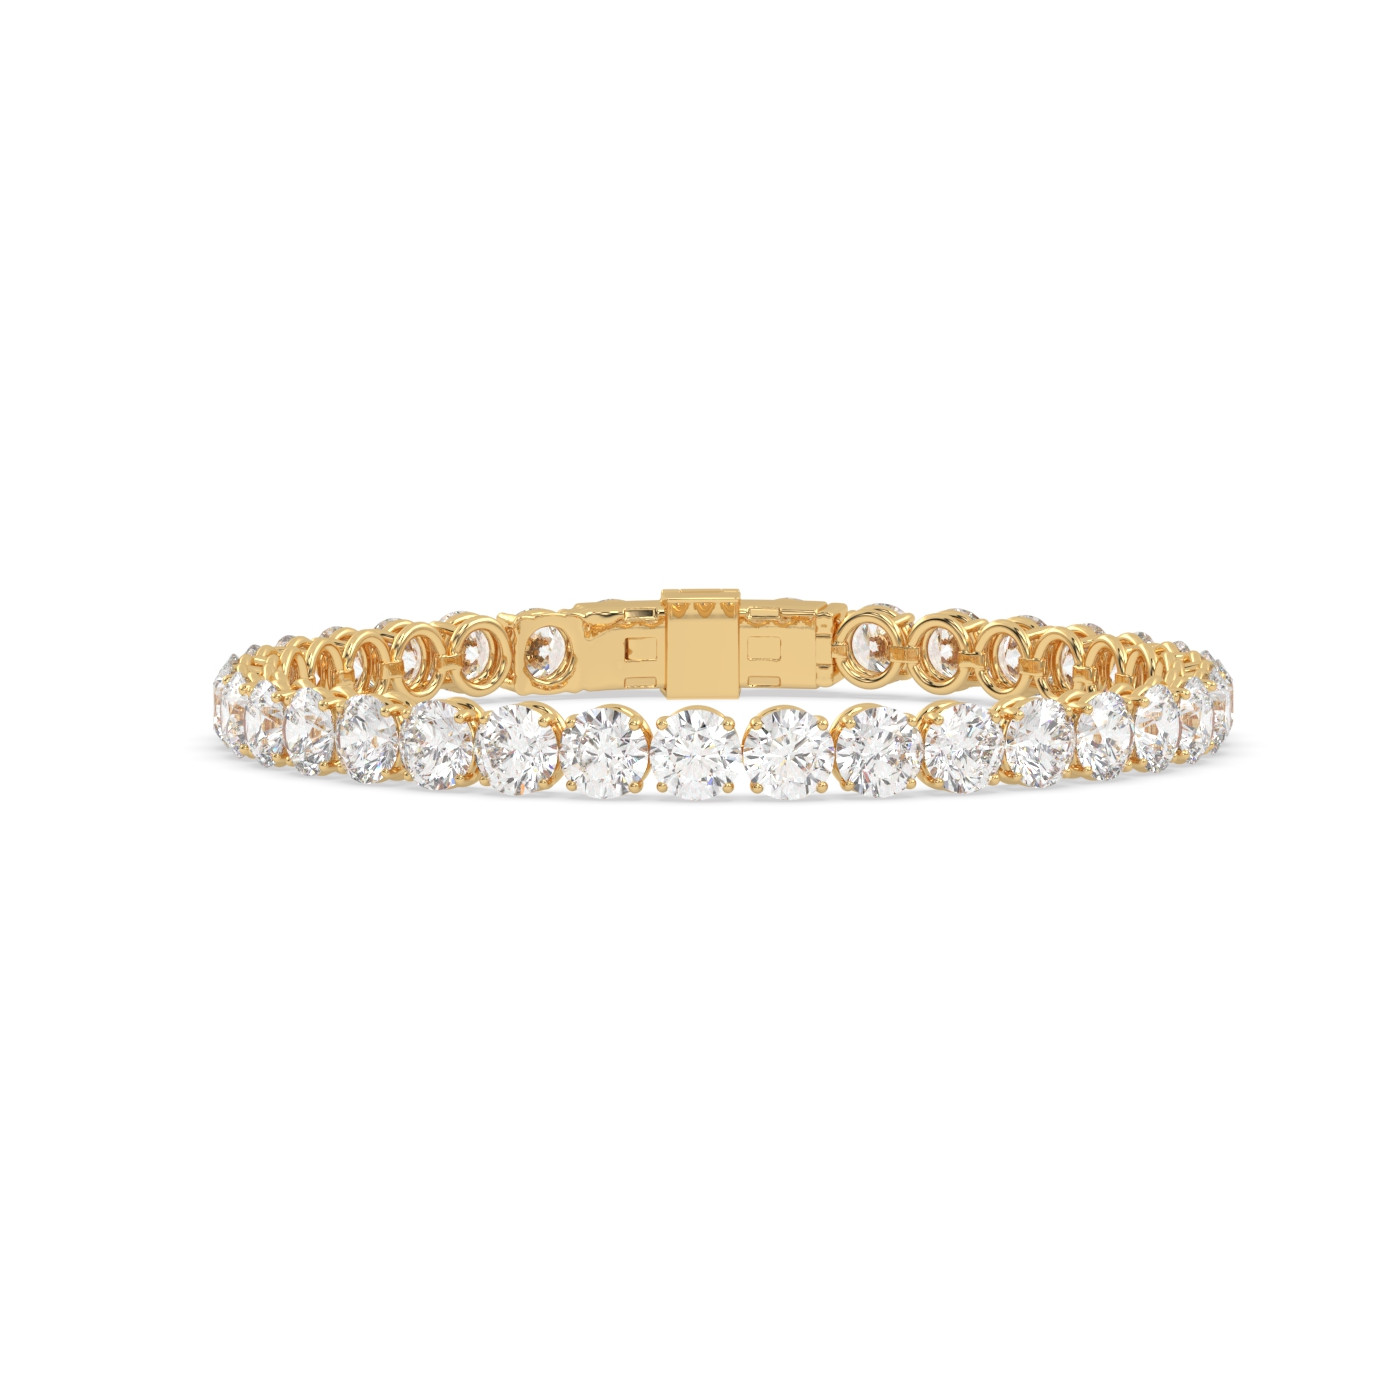 18k yellow gold 10 carat round diamond tennis bracelet with modern american lock system Photos & images